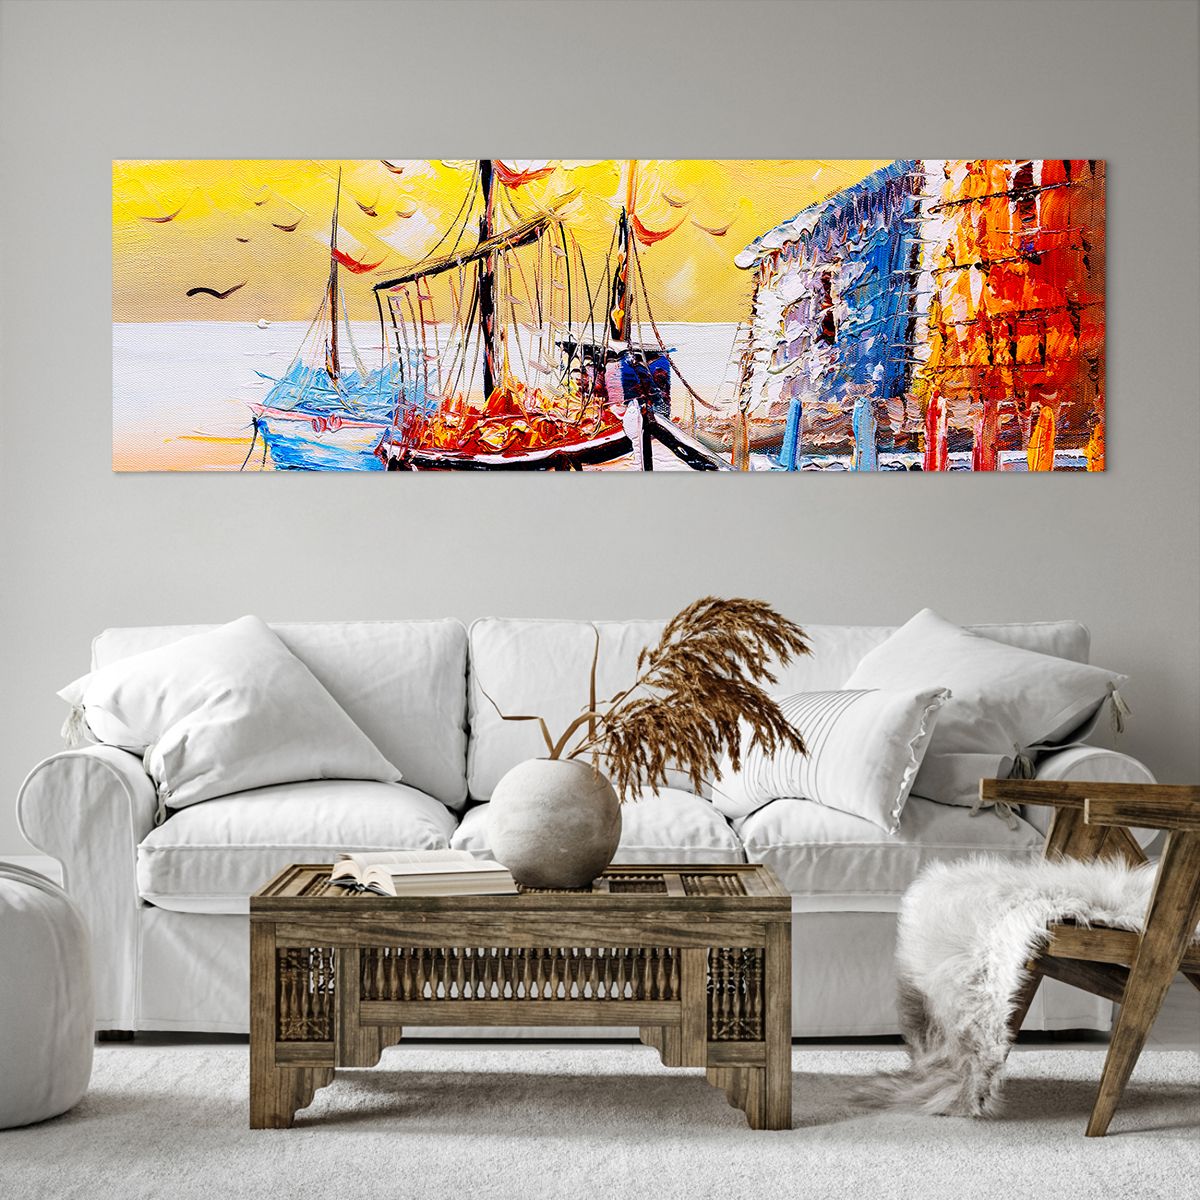 Quadro su tela Paesaggio, Quadro su tela Porto Di Pesca, Quadro su tela Barche, Quadro su tela Gli Uccelli, Quadro su tela Arte